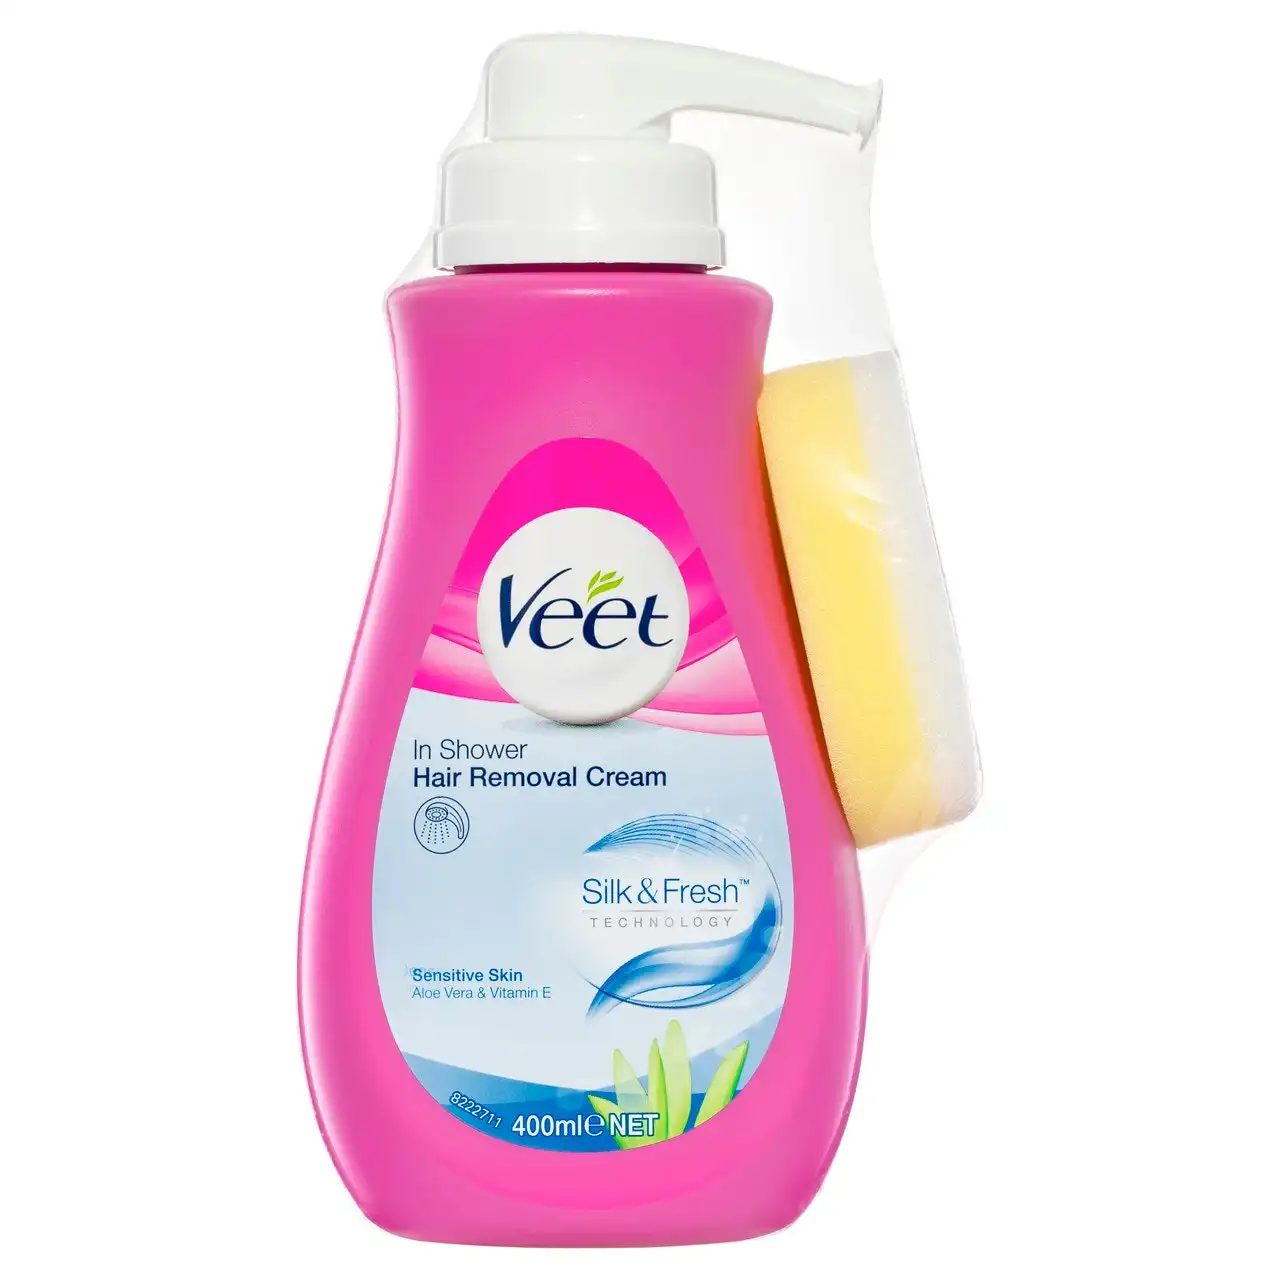 Veet Pure In Shower Hair Removal Cream for Sensitive Skin 400ml